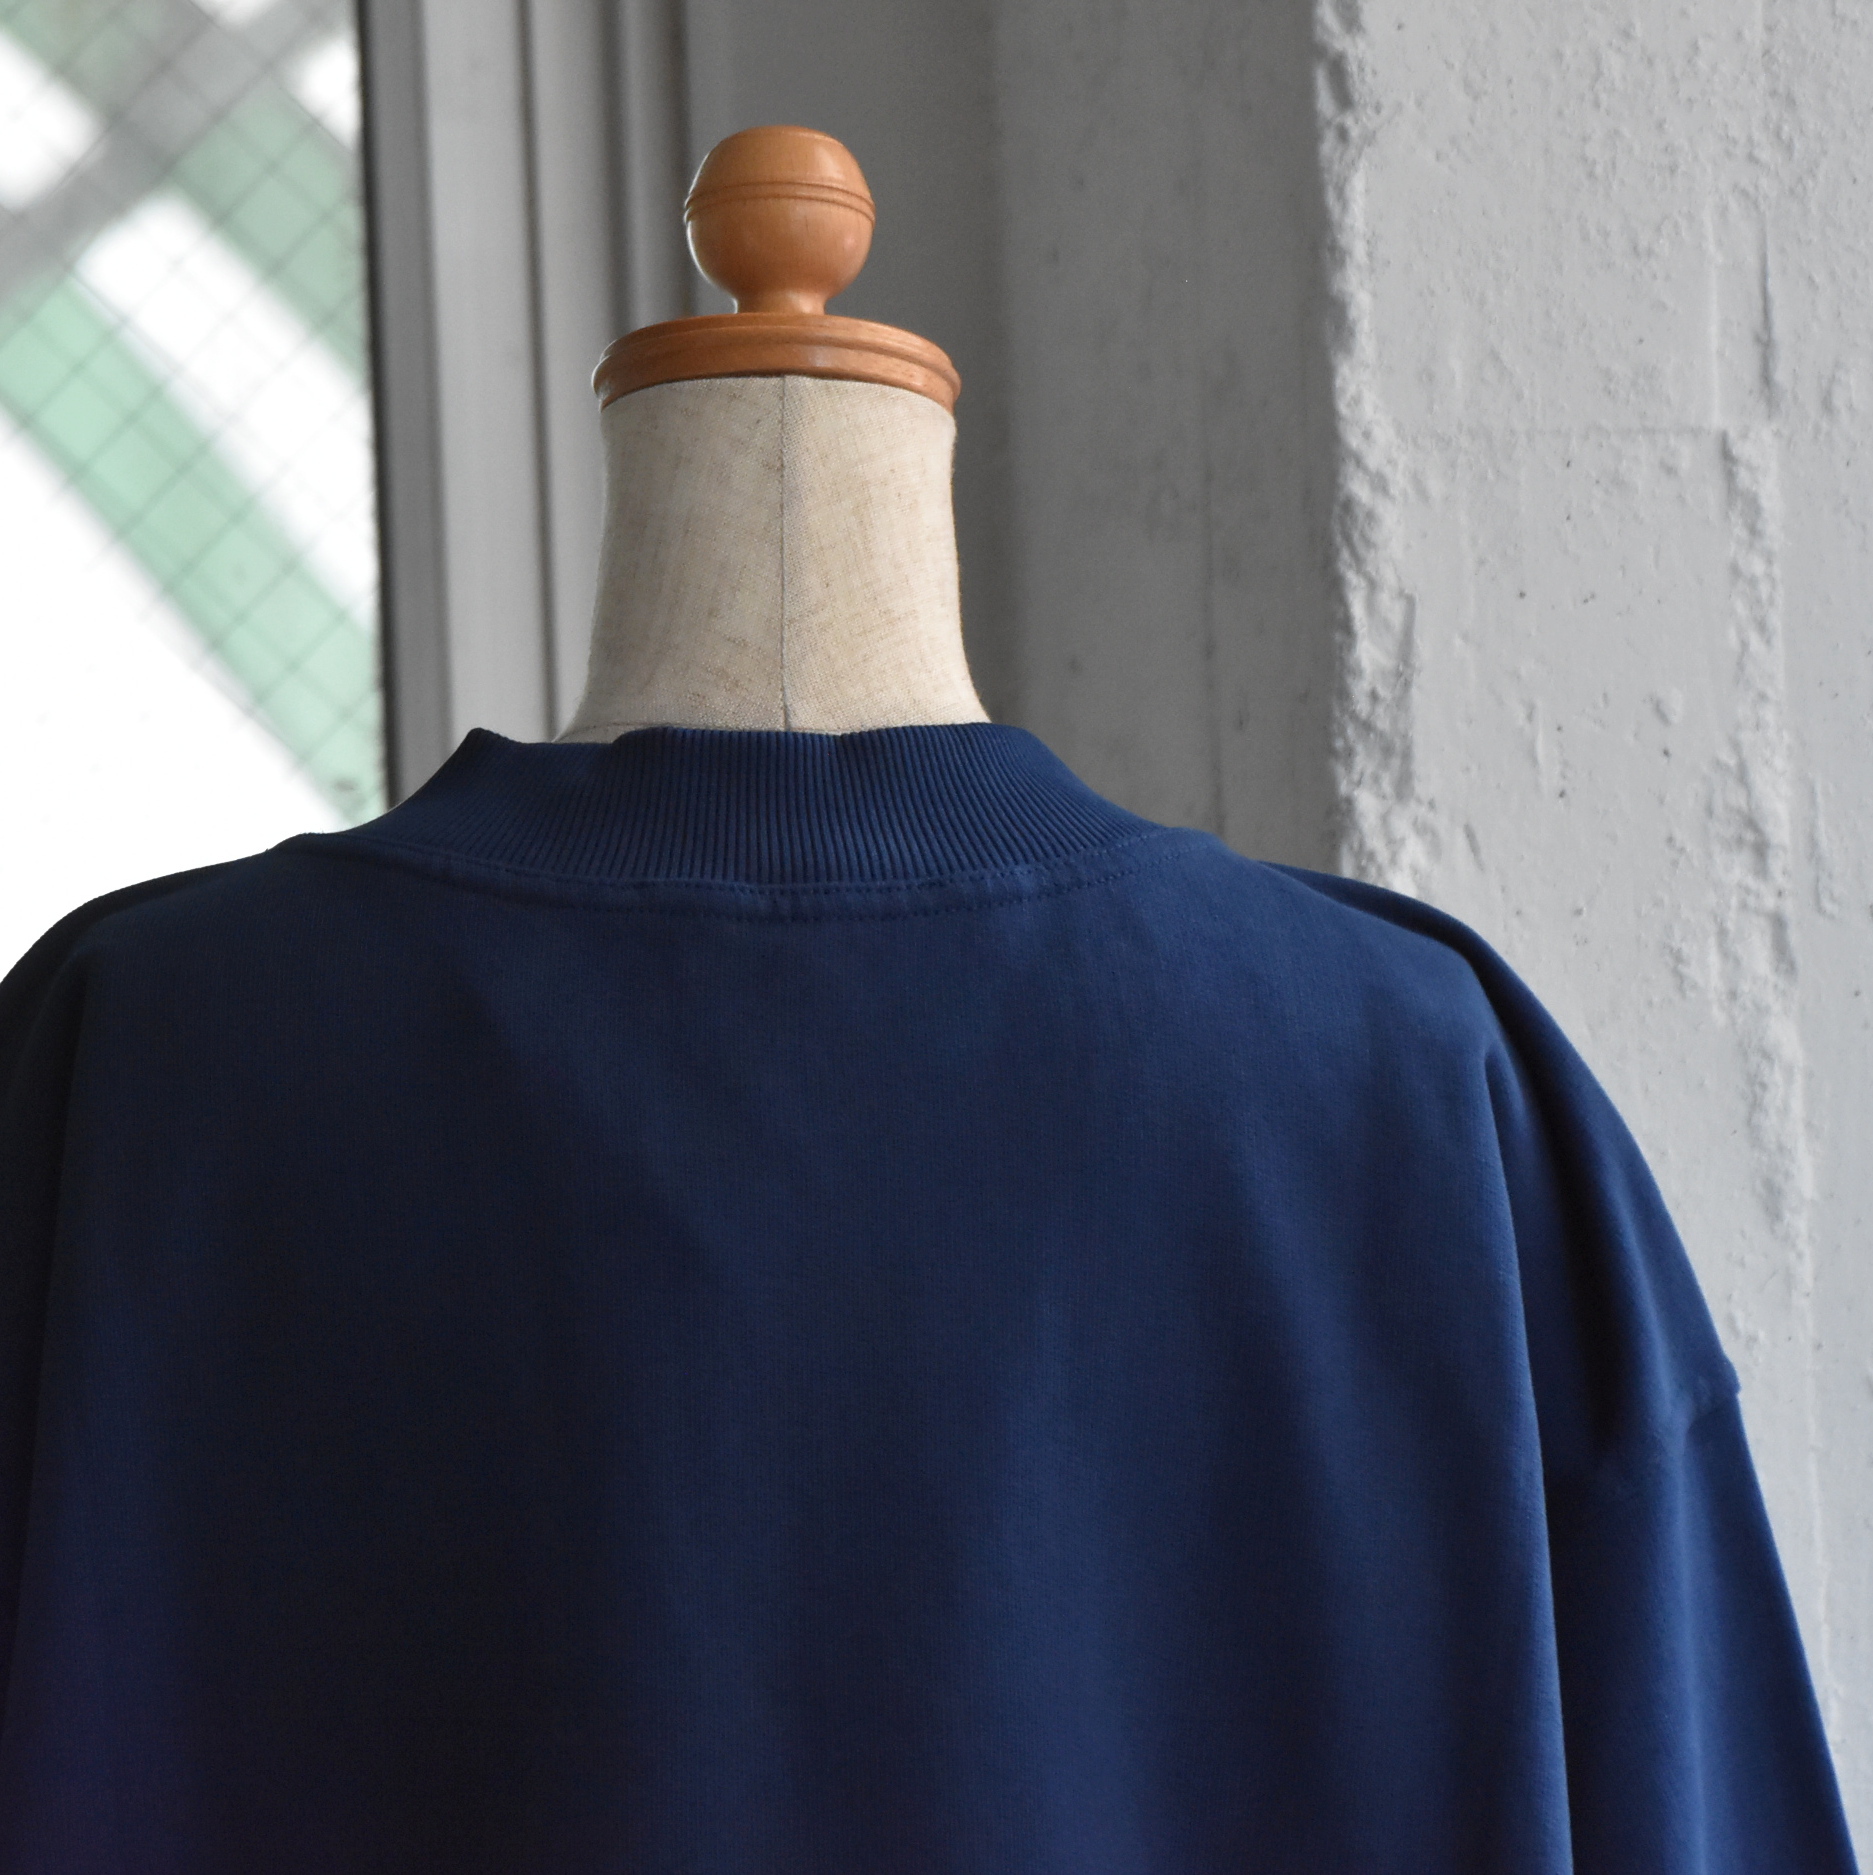 y40% off salezSOFIE D'HOORE(\tB[h[) / Long sleeve C-neck sweatshirt with top stichy2FWJz #TASTE-AA(8)